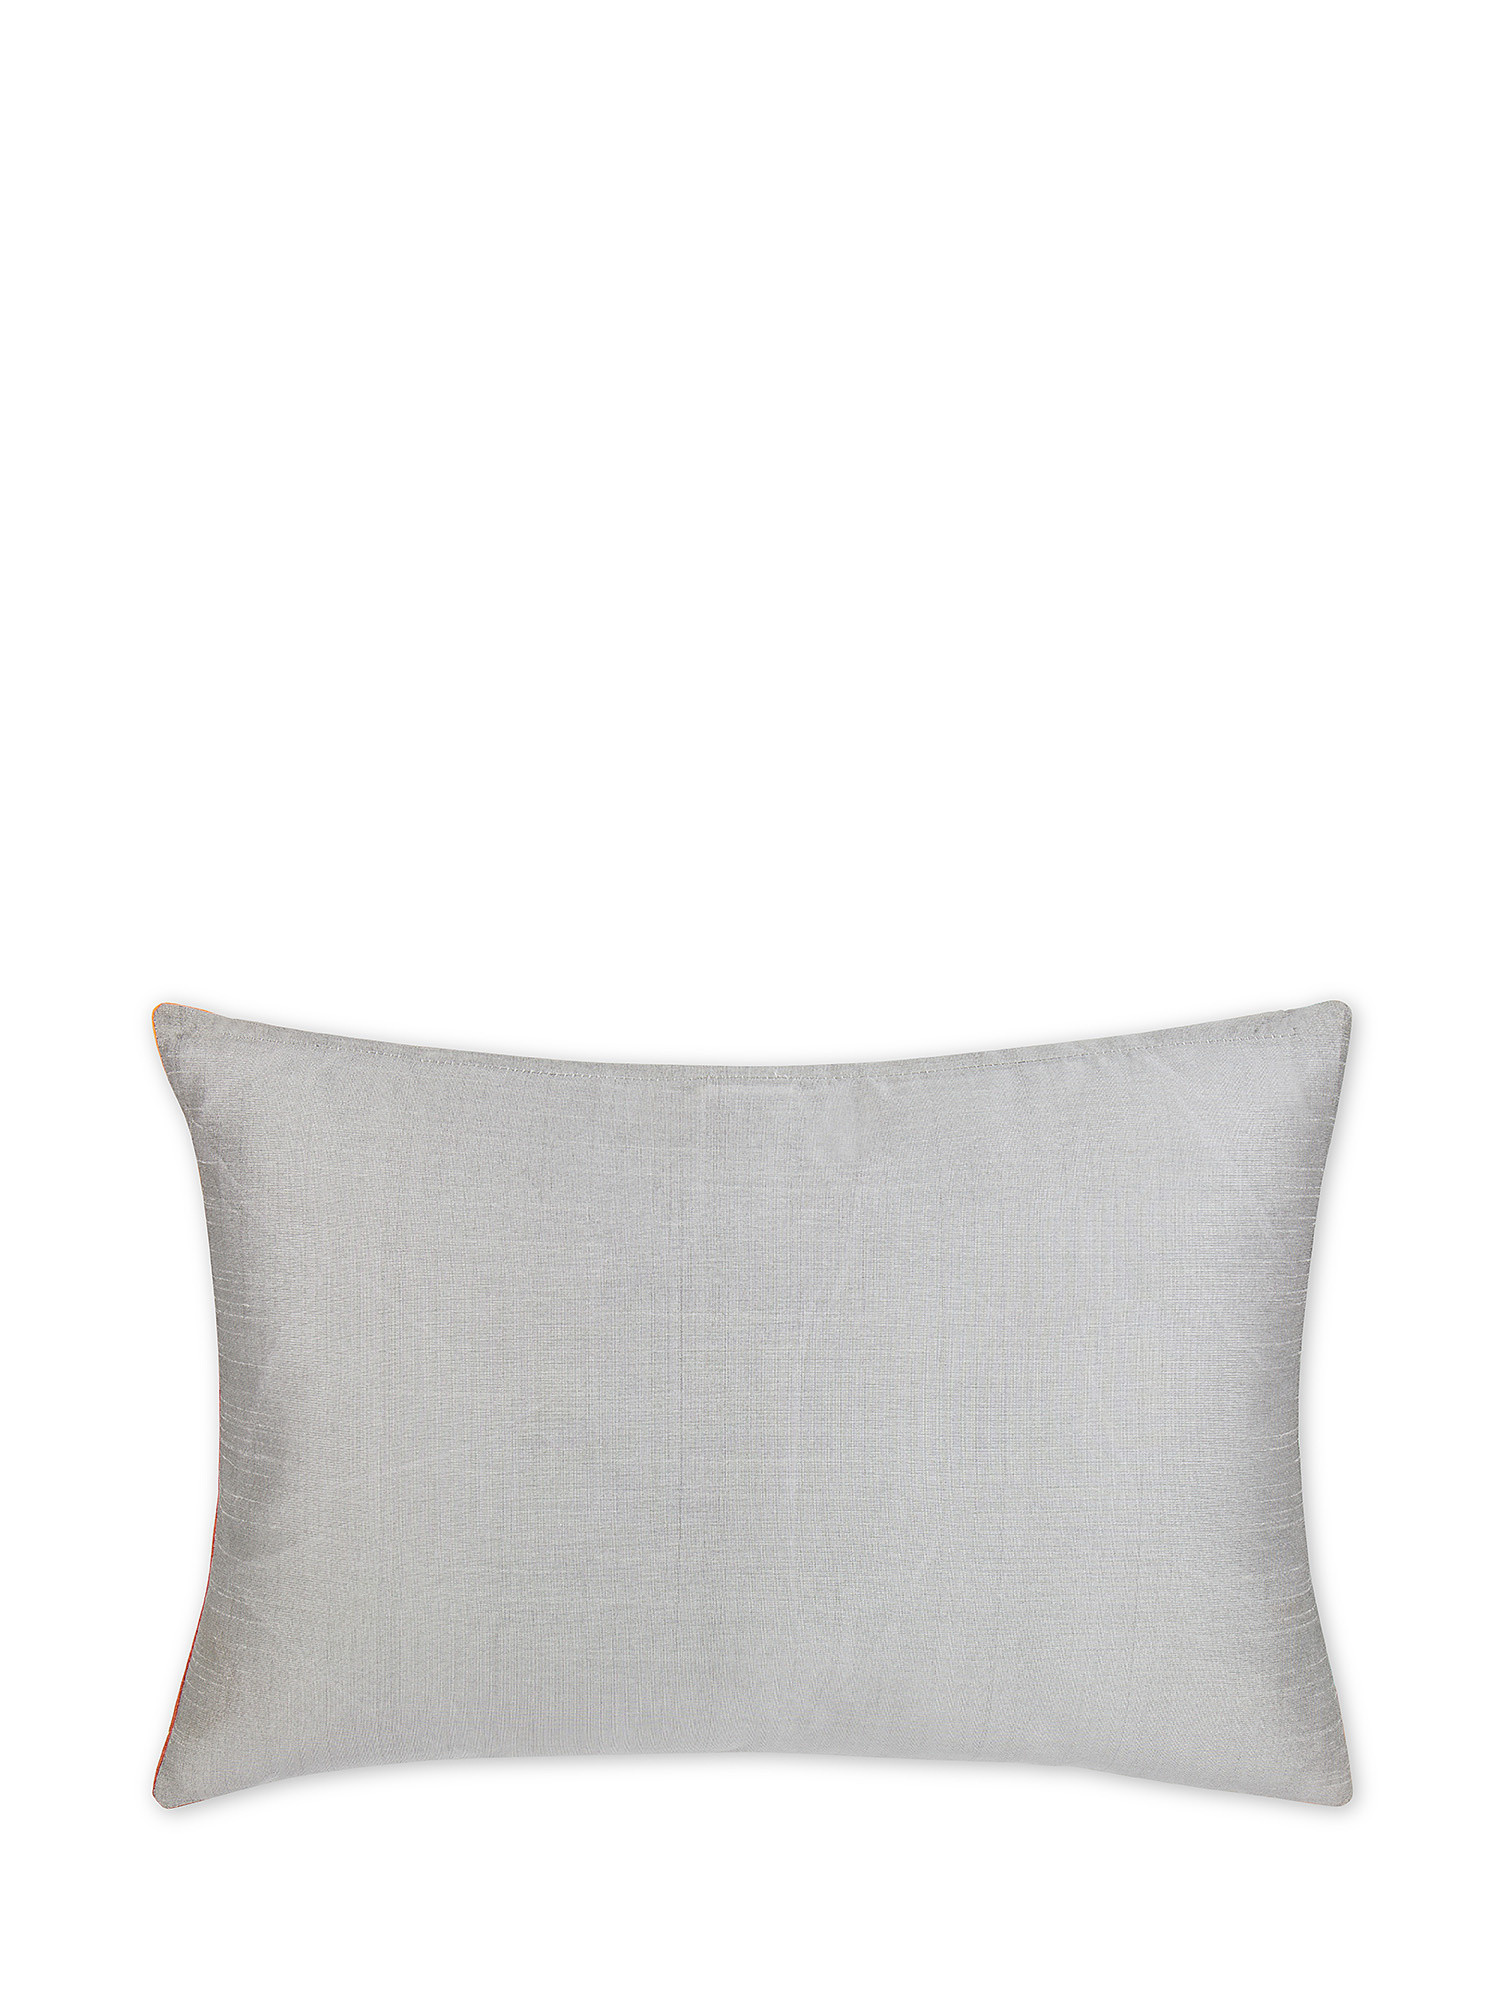 Ikat print silk cushion 35x50cm, Teal, large image number 1